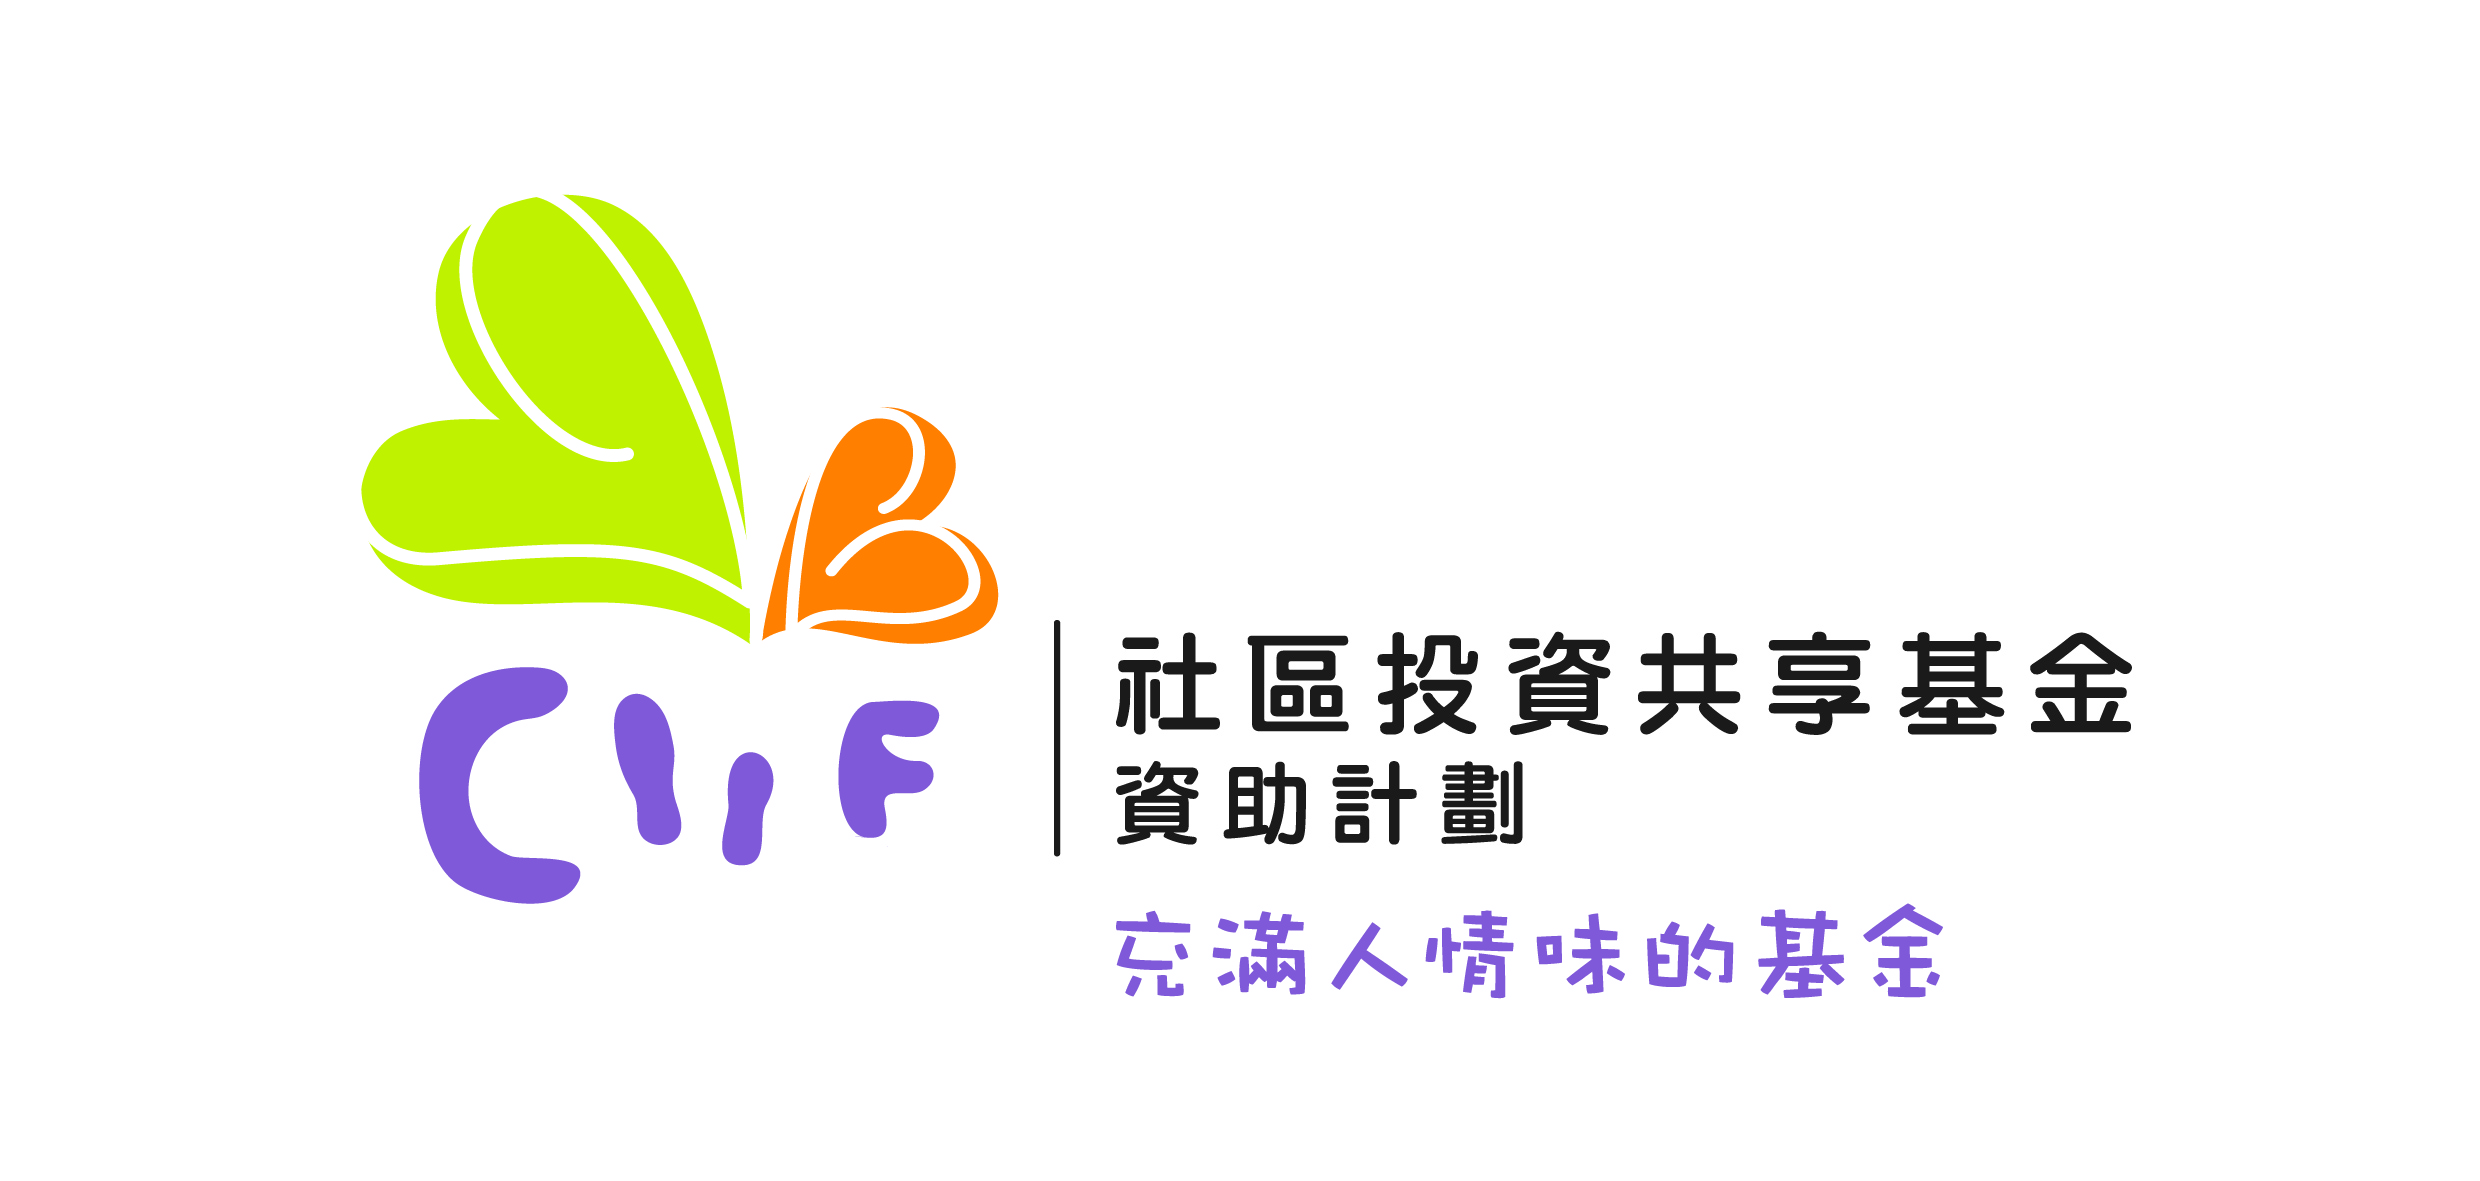 CIIF_logo_Project_chi-1.jpg